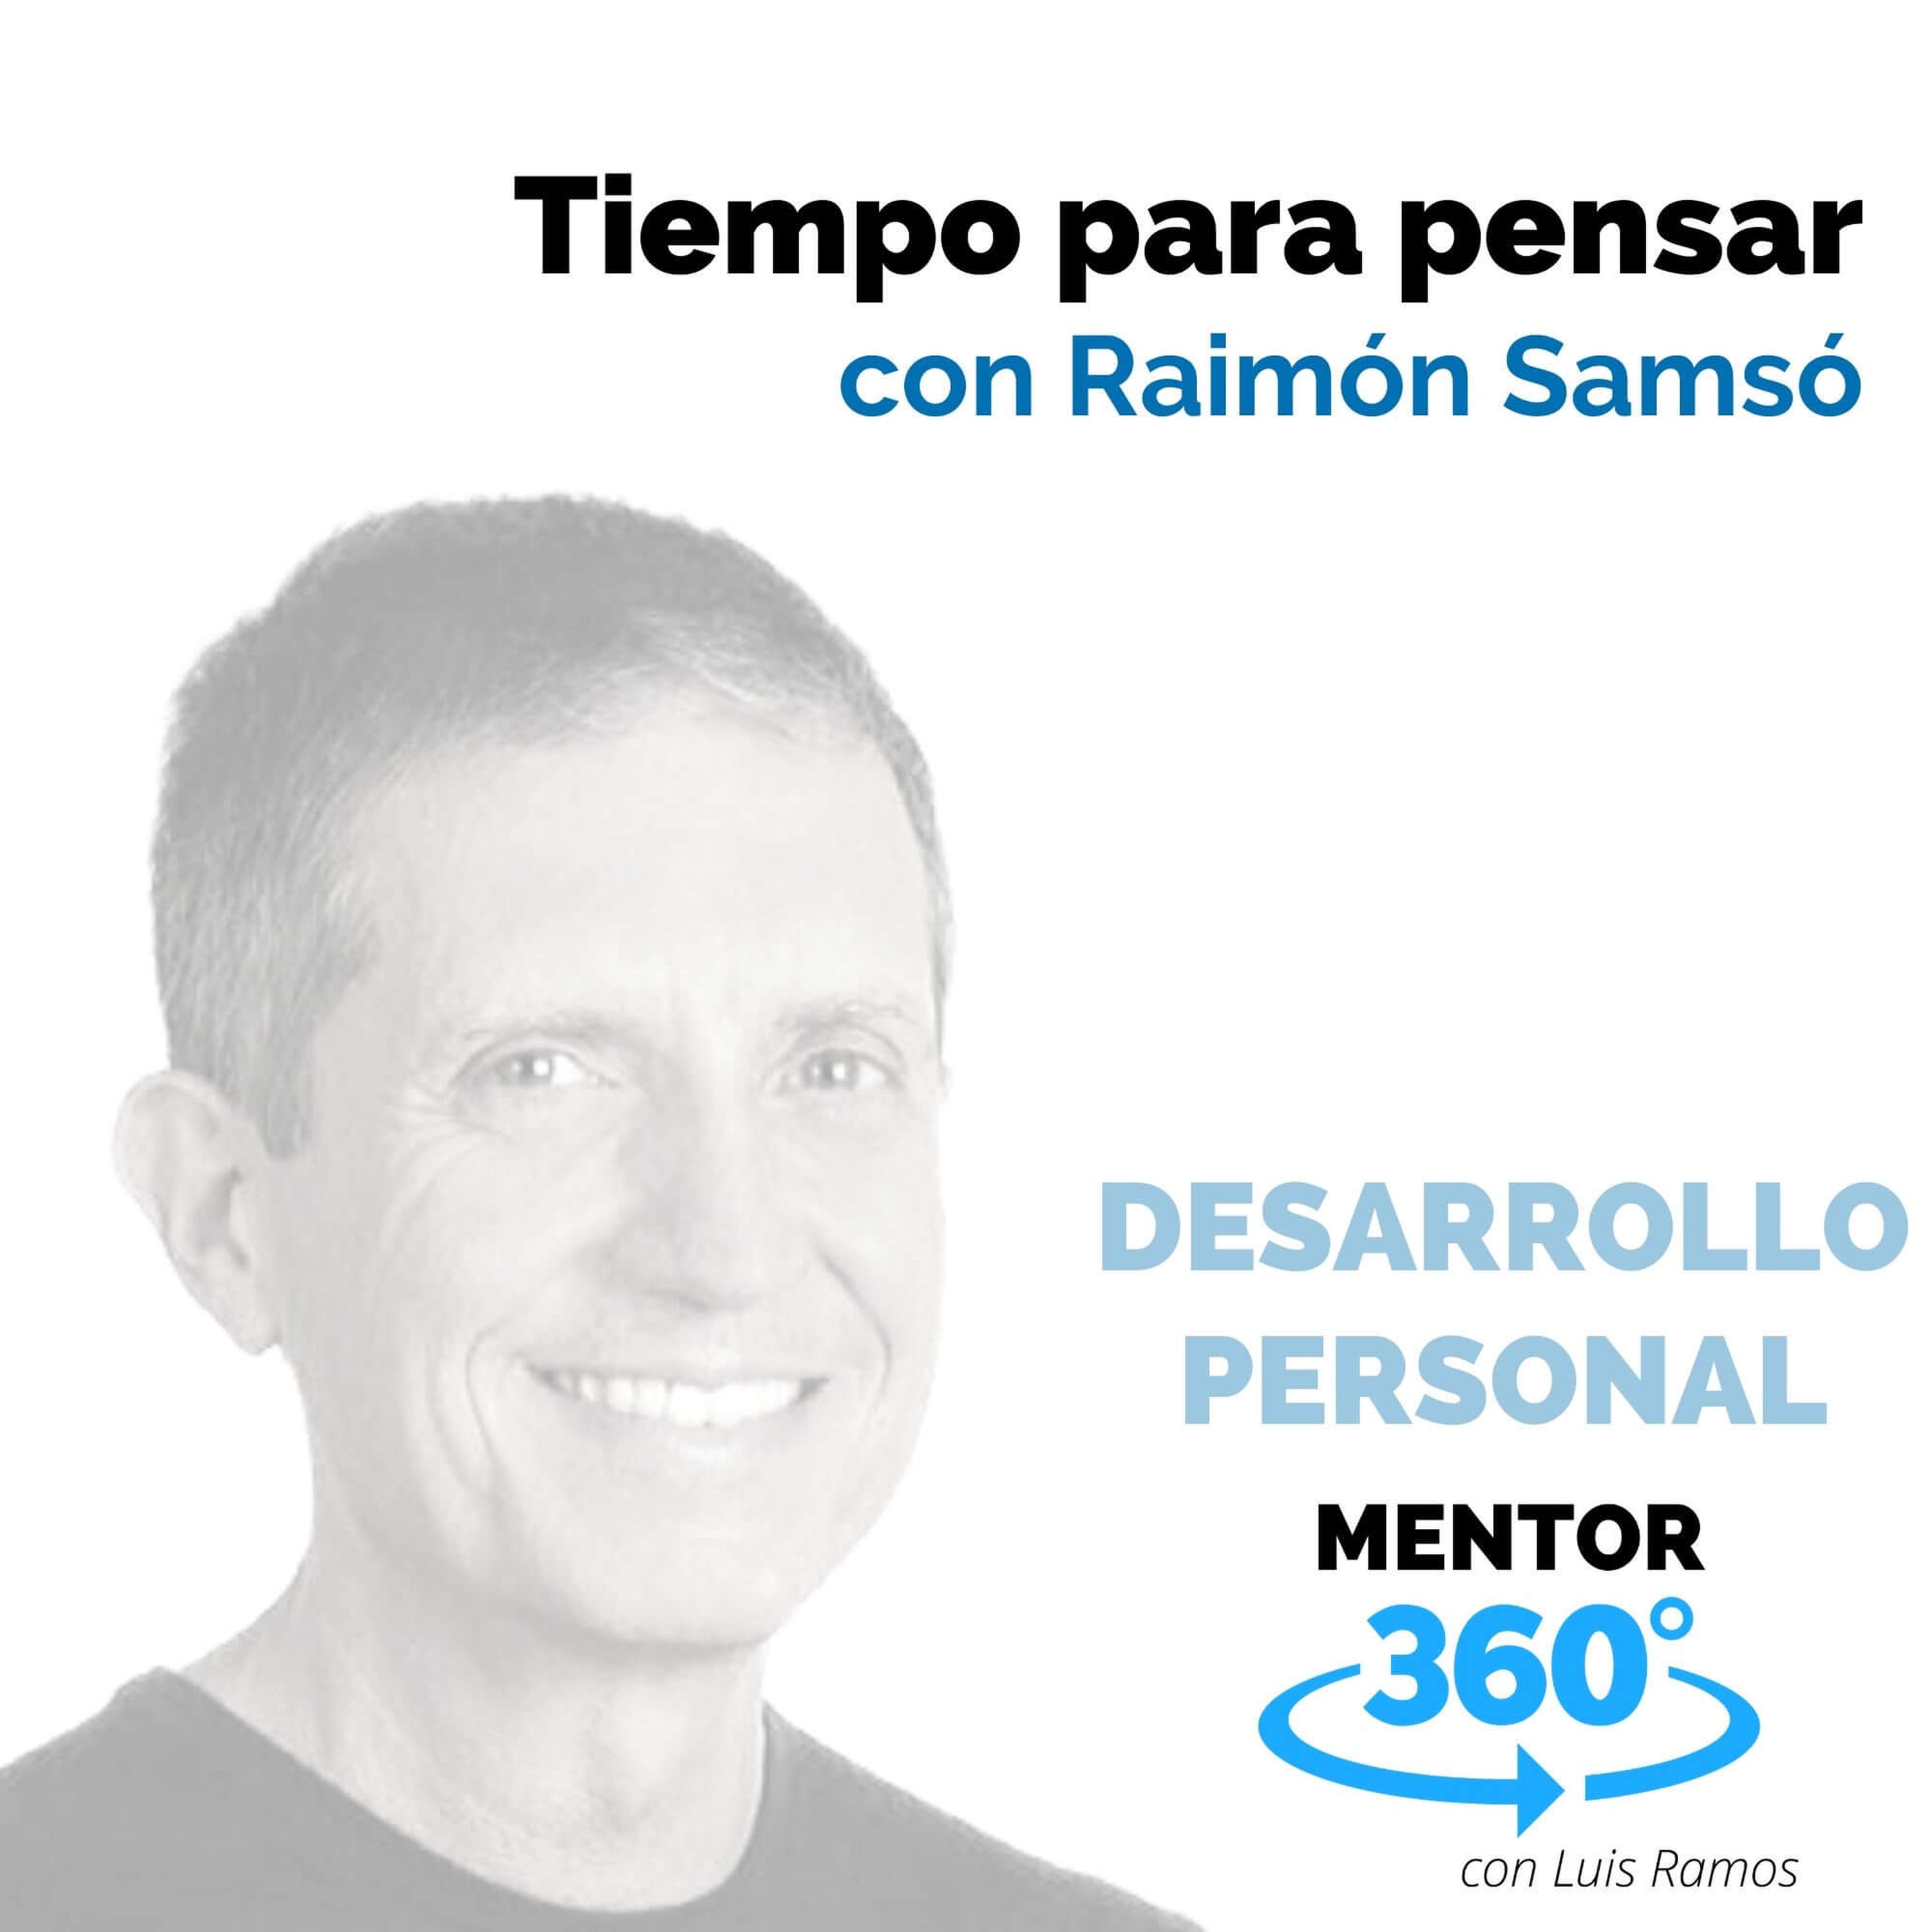 Tiempo para pensar, con Raimón Samsó - DESARROLLO PERSONAL